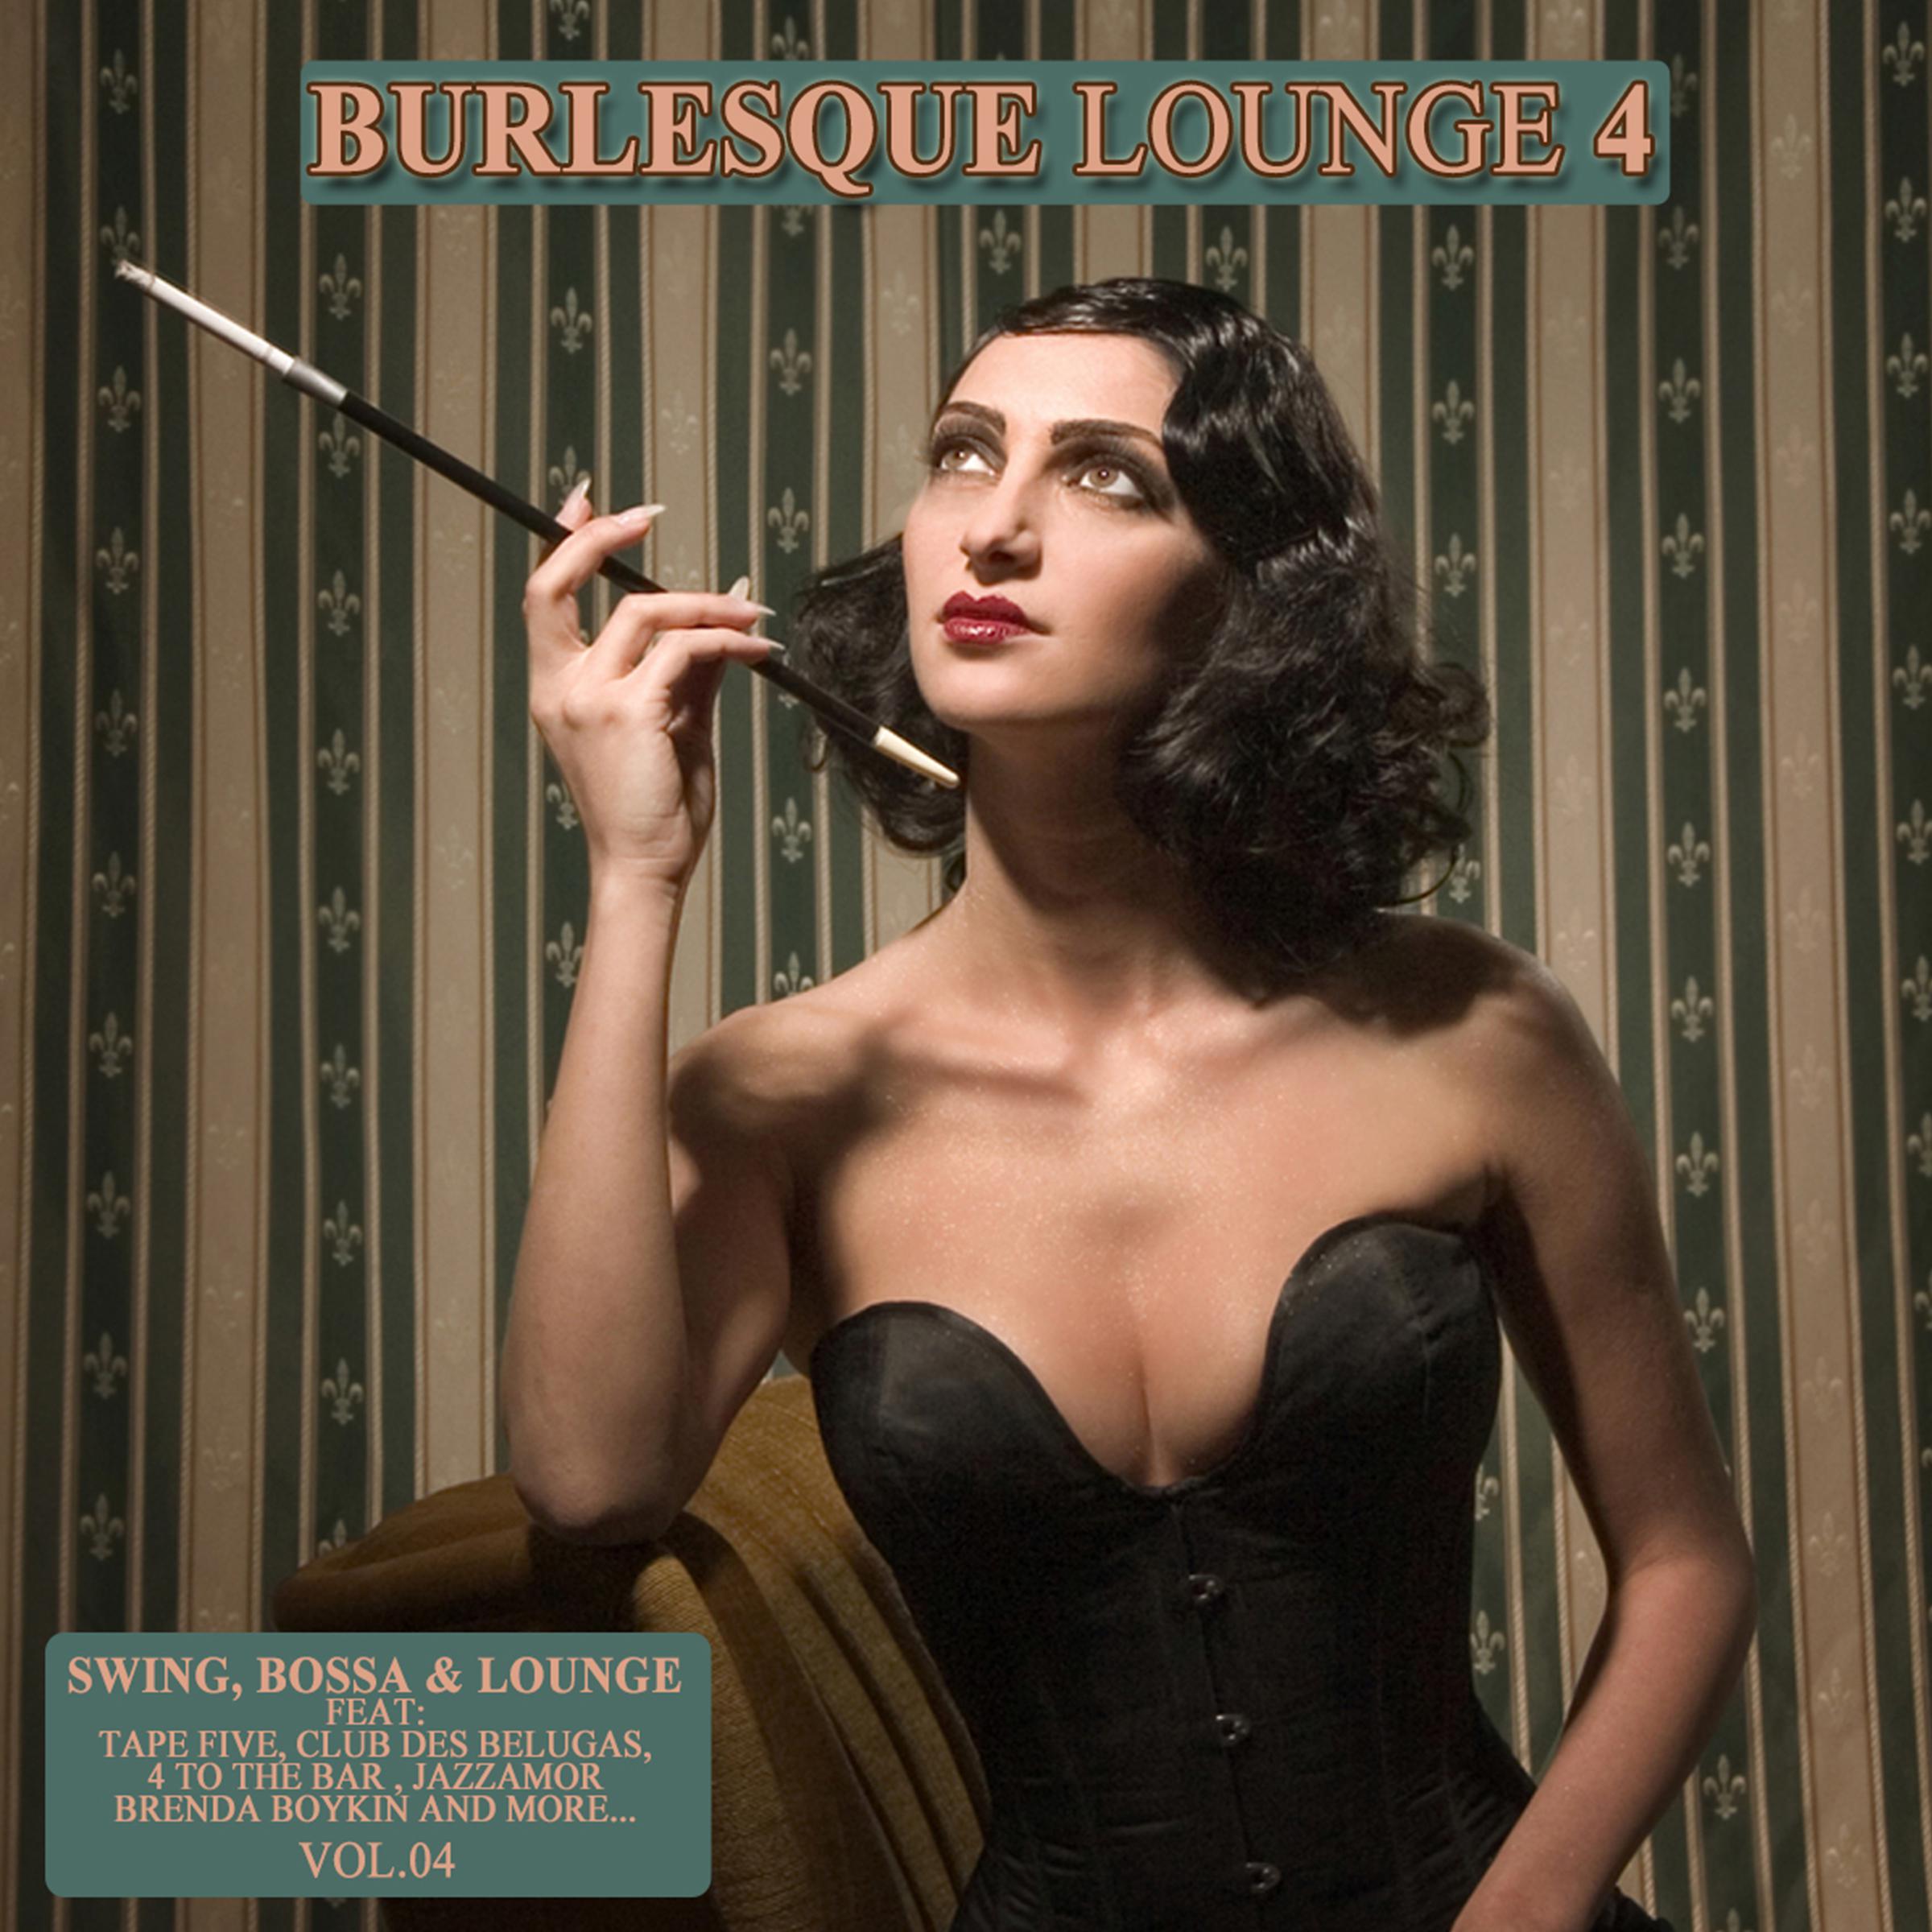 Burlesque Lounge 4